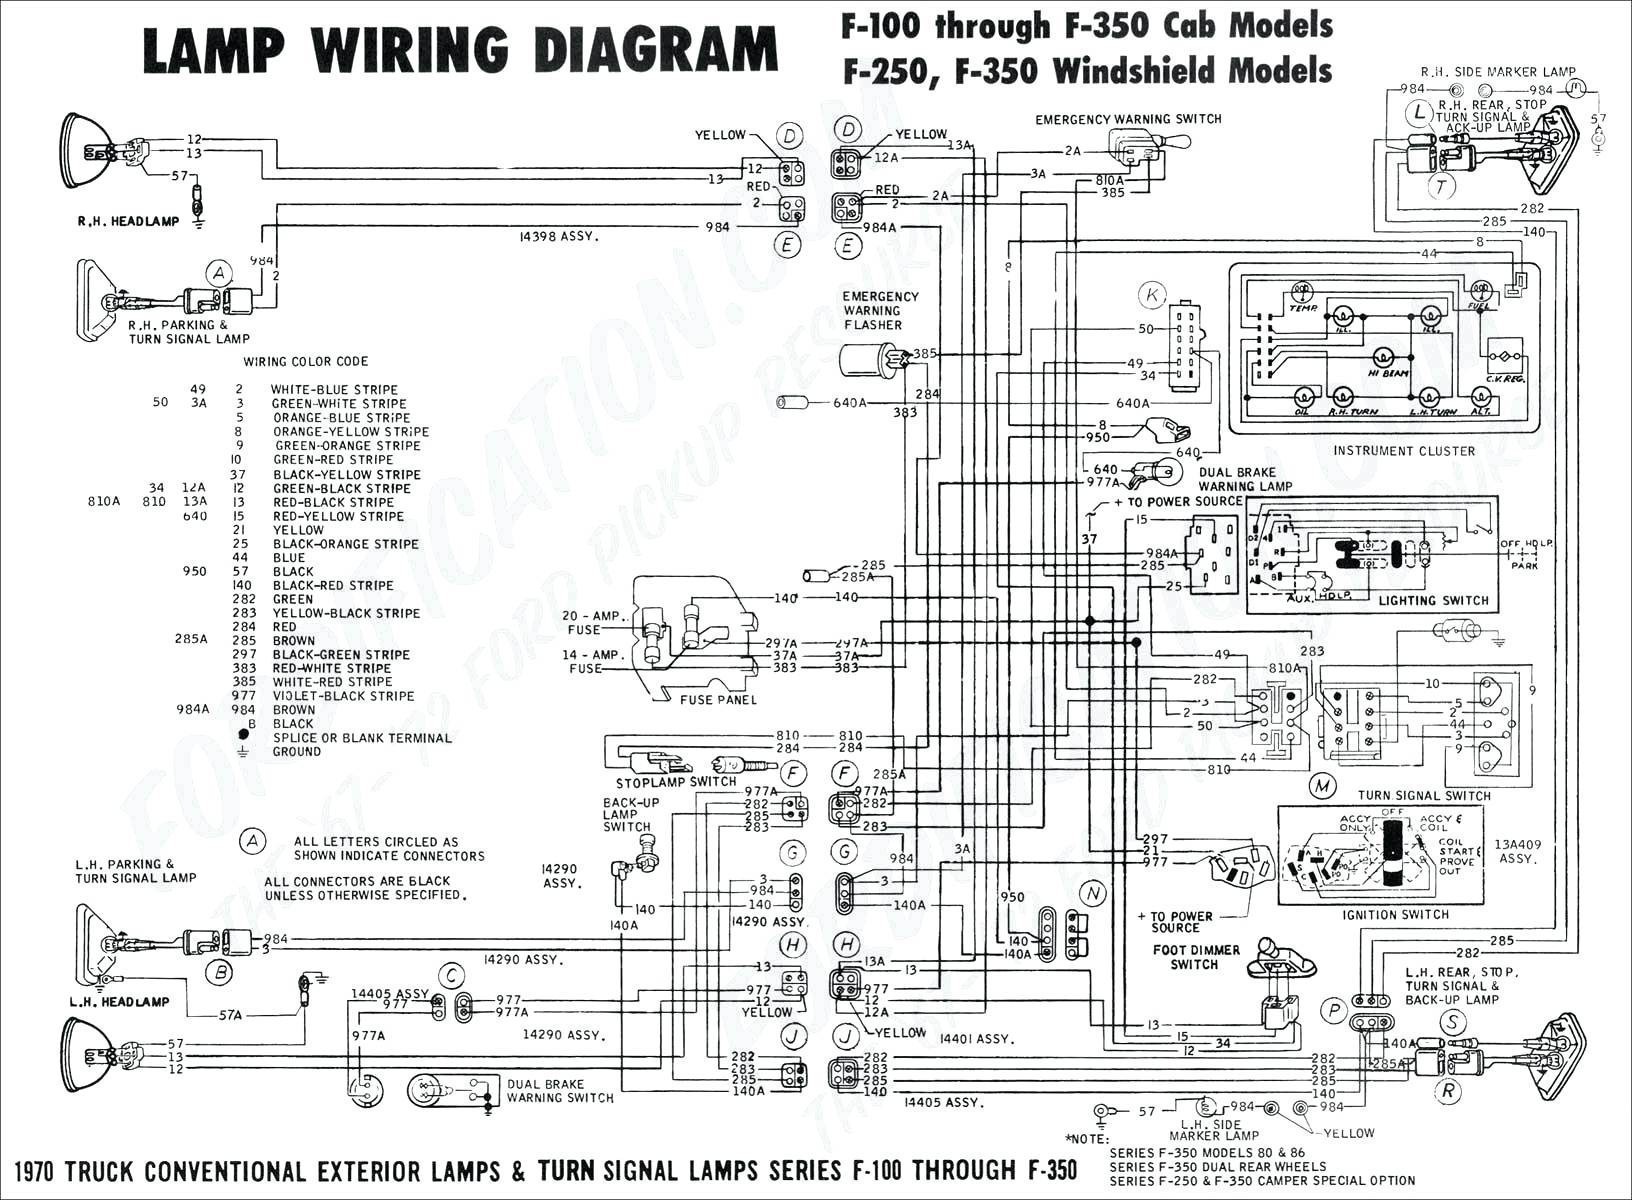 2003 ford Explorer Wiring Diagram Wiring Diagram 2005 F350 Super Duty 6 0 Schematics Wiring Diagrams • Of 2003 ford Explorer Wiring Diagram